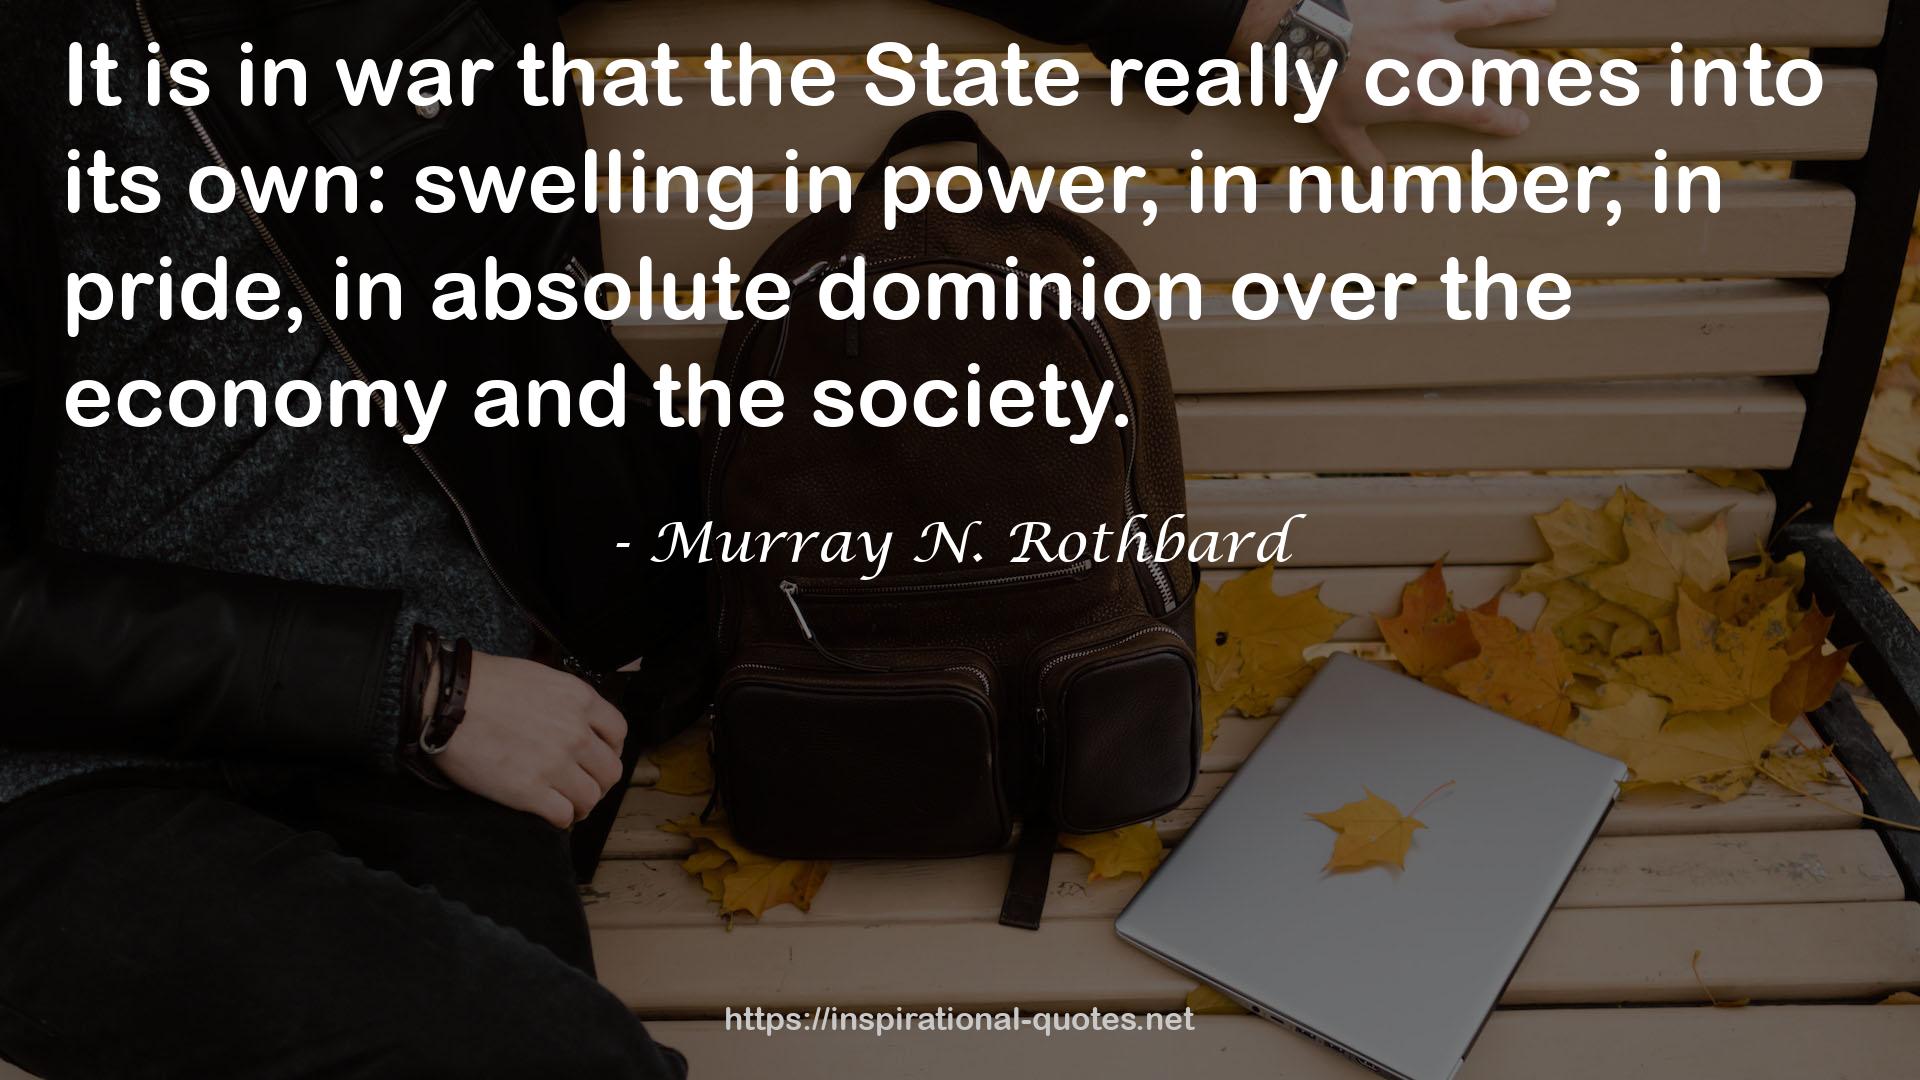 Murray N. Rothbard QUOTES